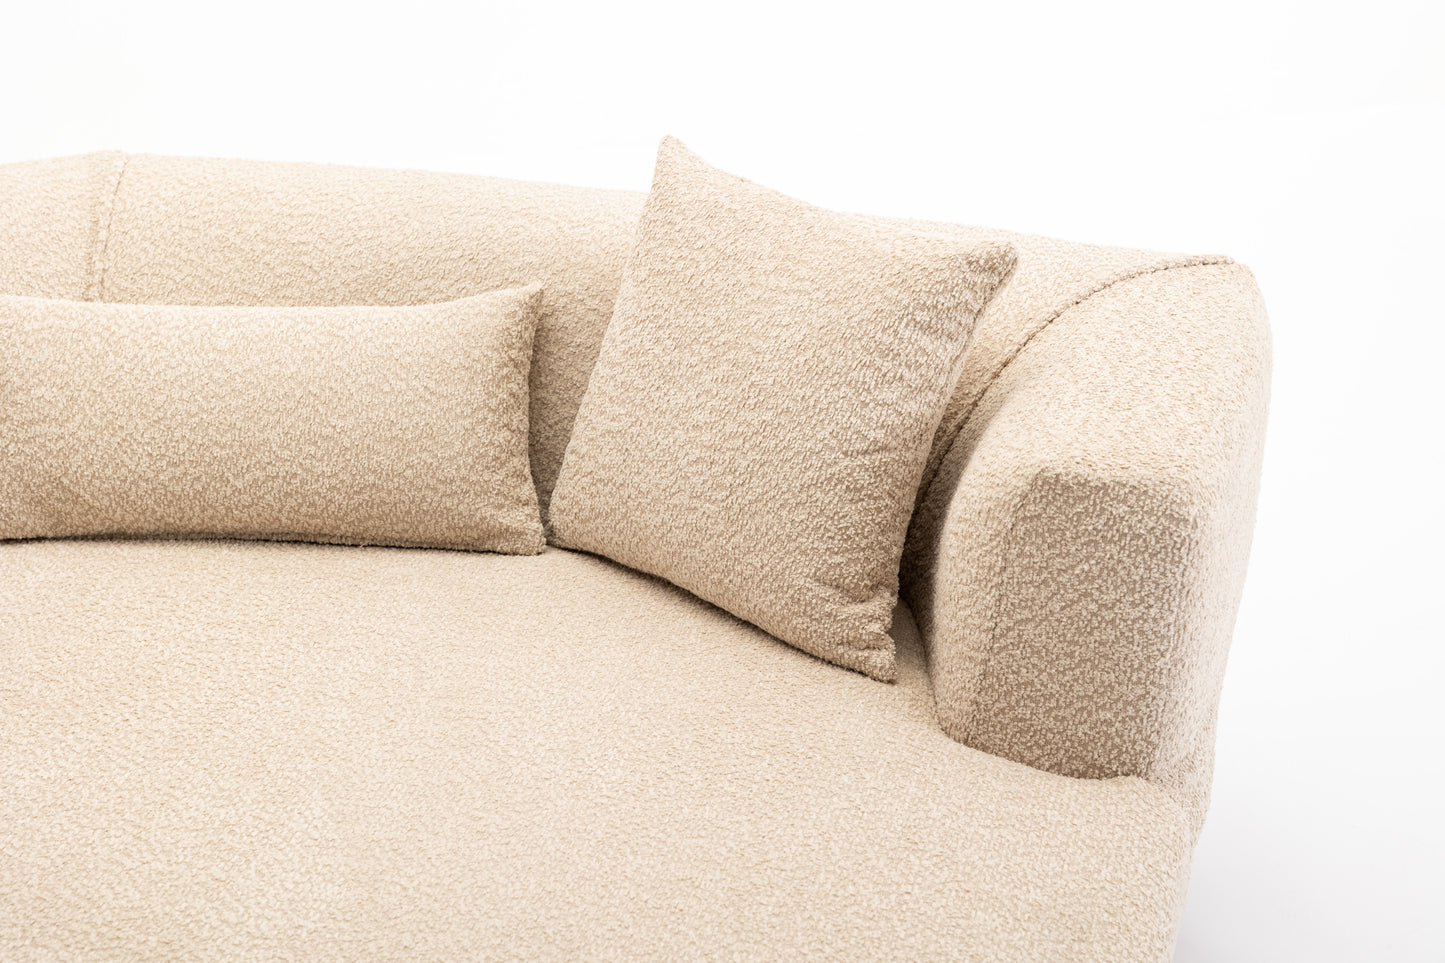 Modular Sectional Sleeper Sofa Set, Light Brown